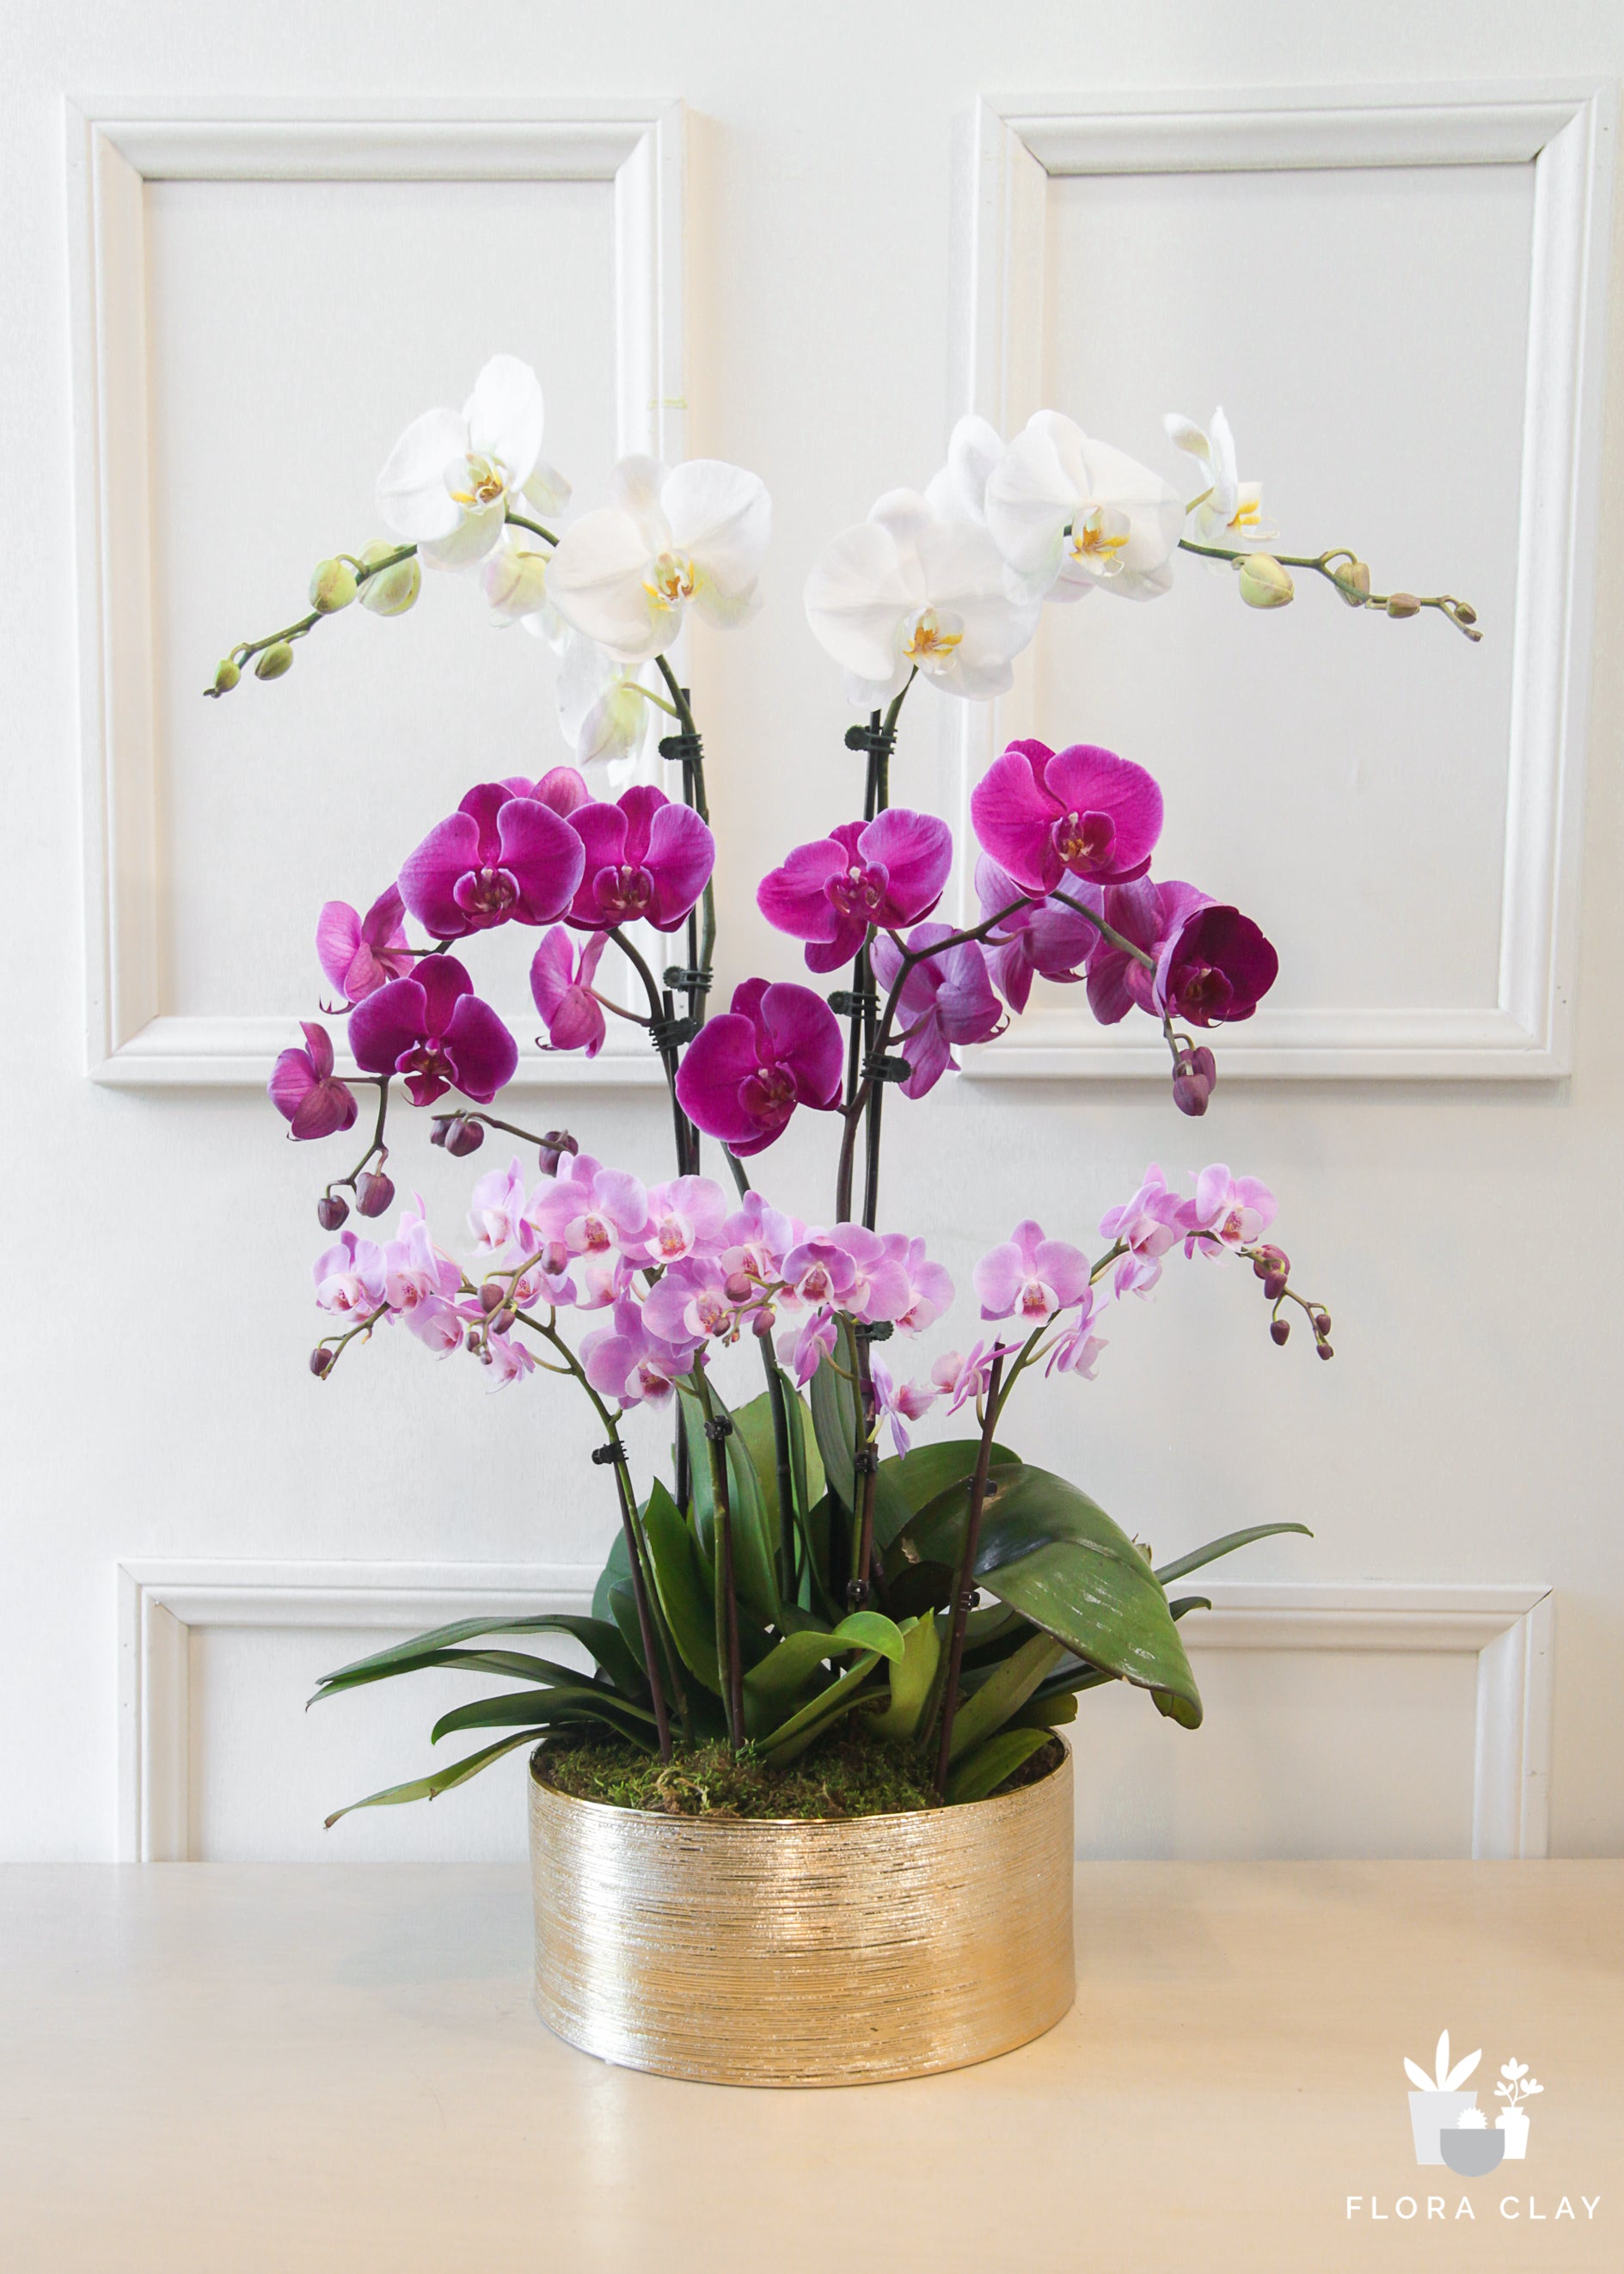 classy-orchid-arrangement-renewed-floraclay-1.jpg